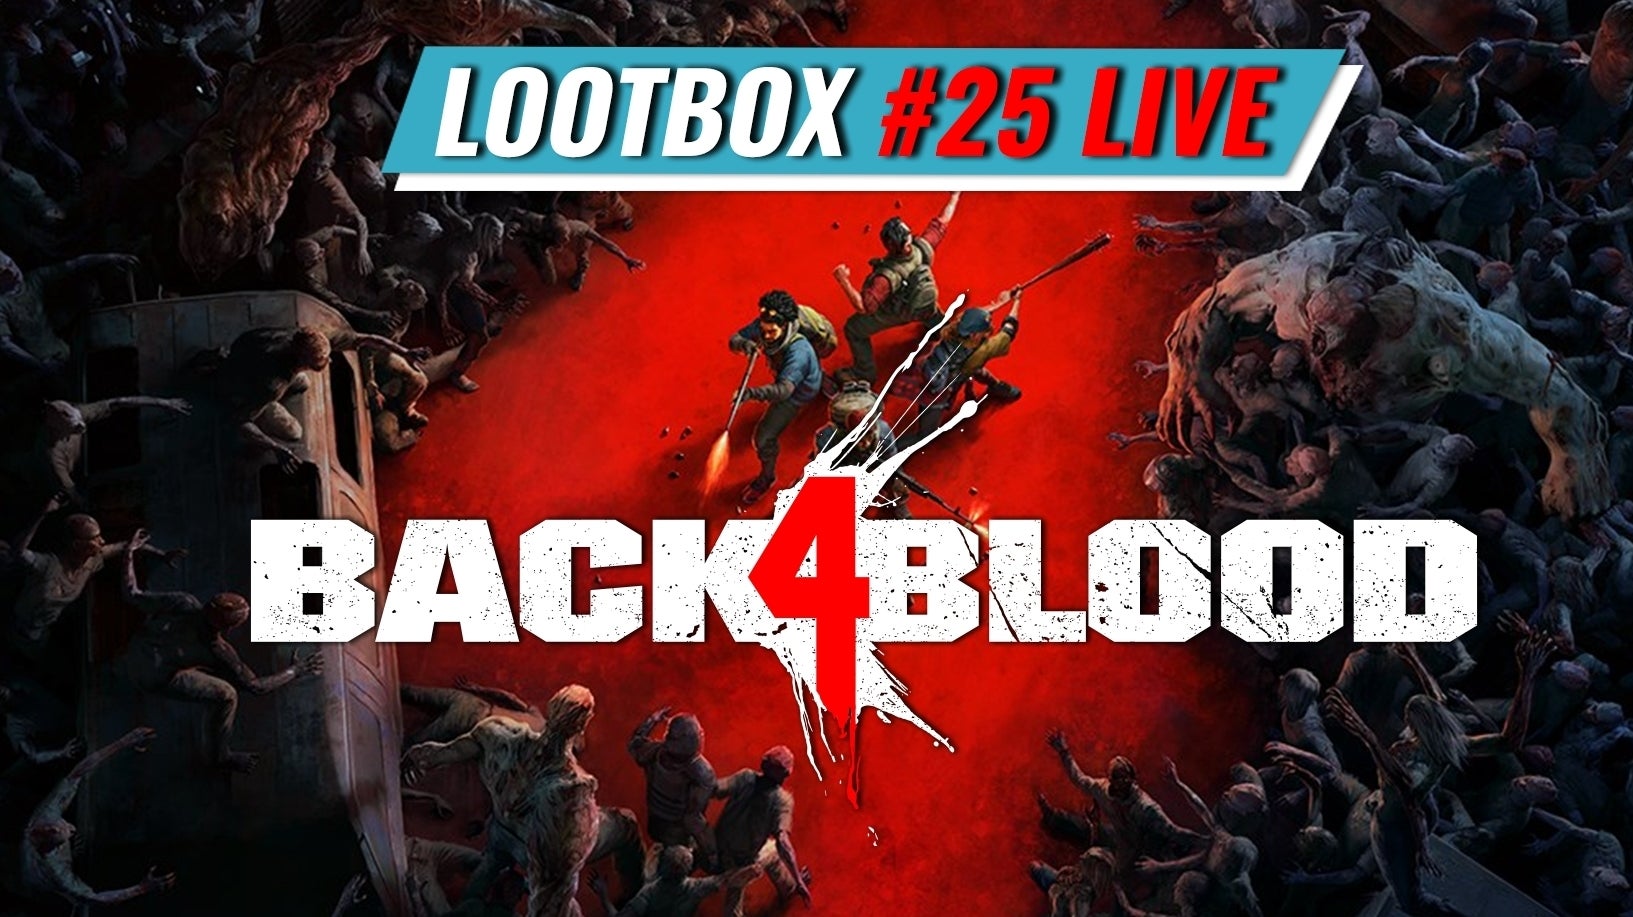 Imagem para Lootbox #25 LIVE - beta Back 4 Blood